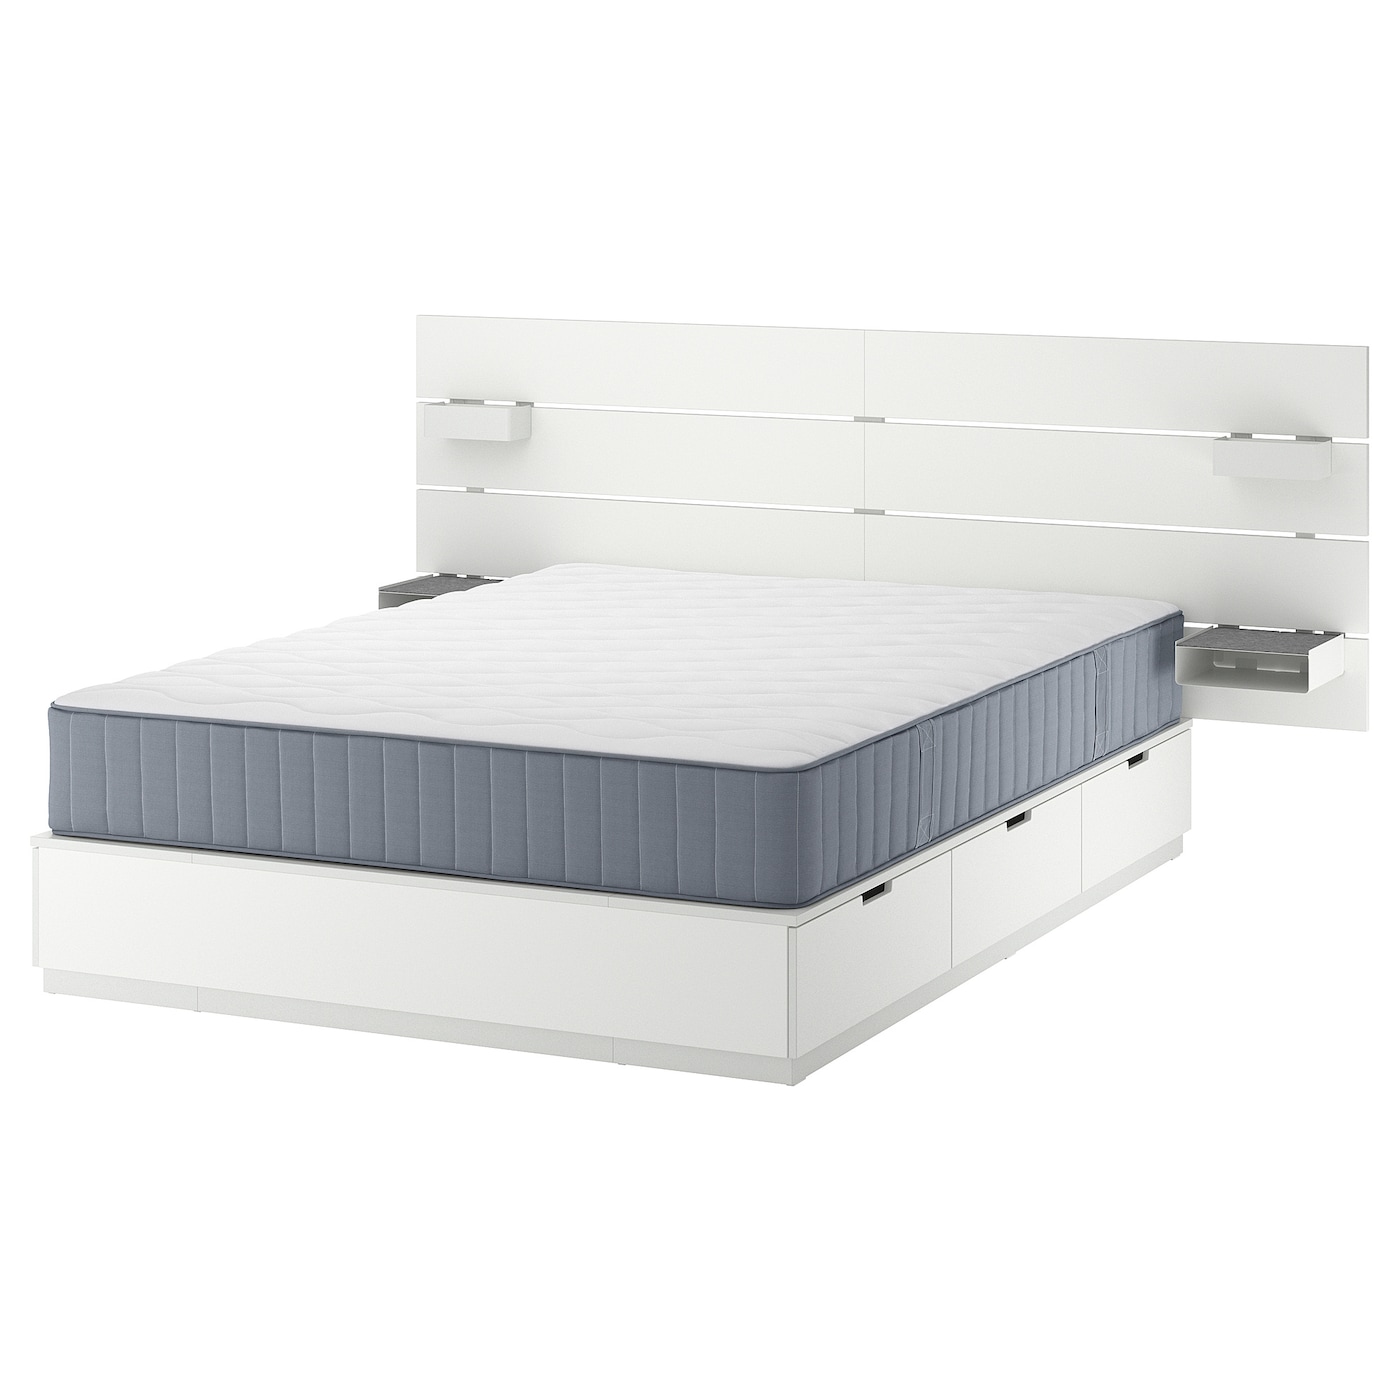 Каркас кровати с контейнером и матрасом - IKEA NORDLI, 200х140 см, матрас жесткий, белый, НОРДЛИ ИКЕА